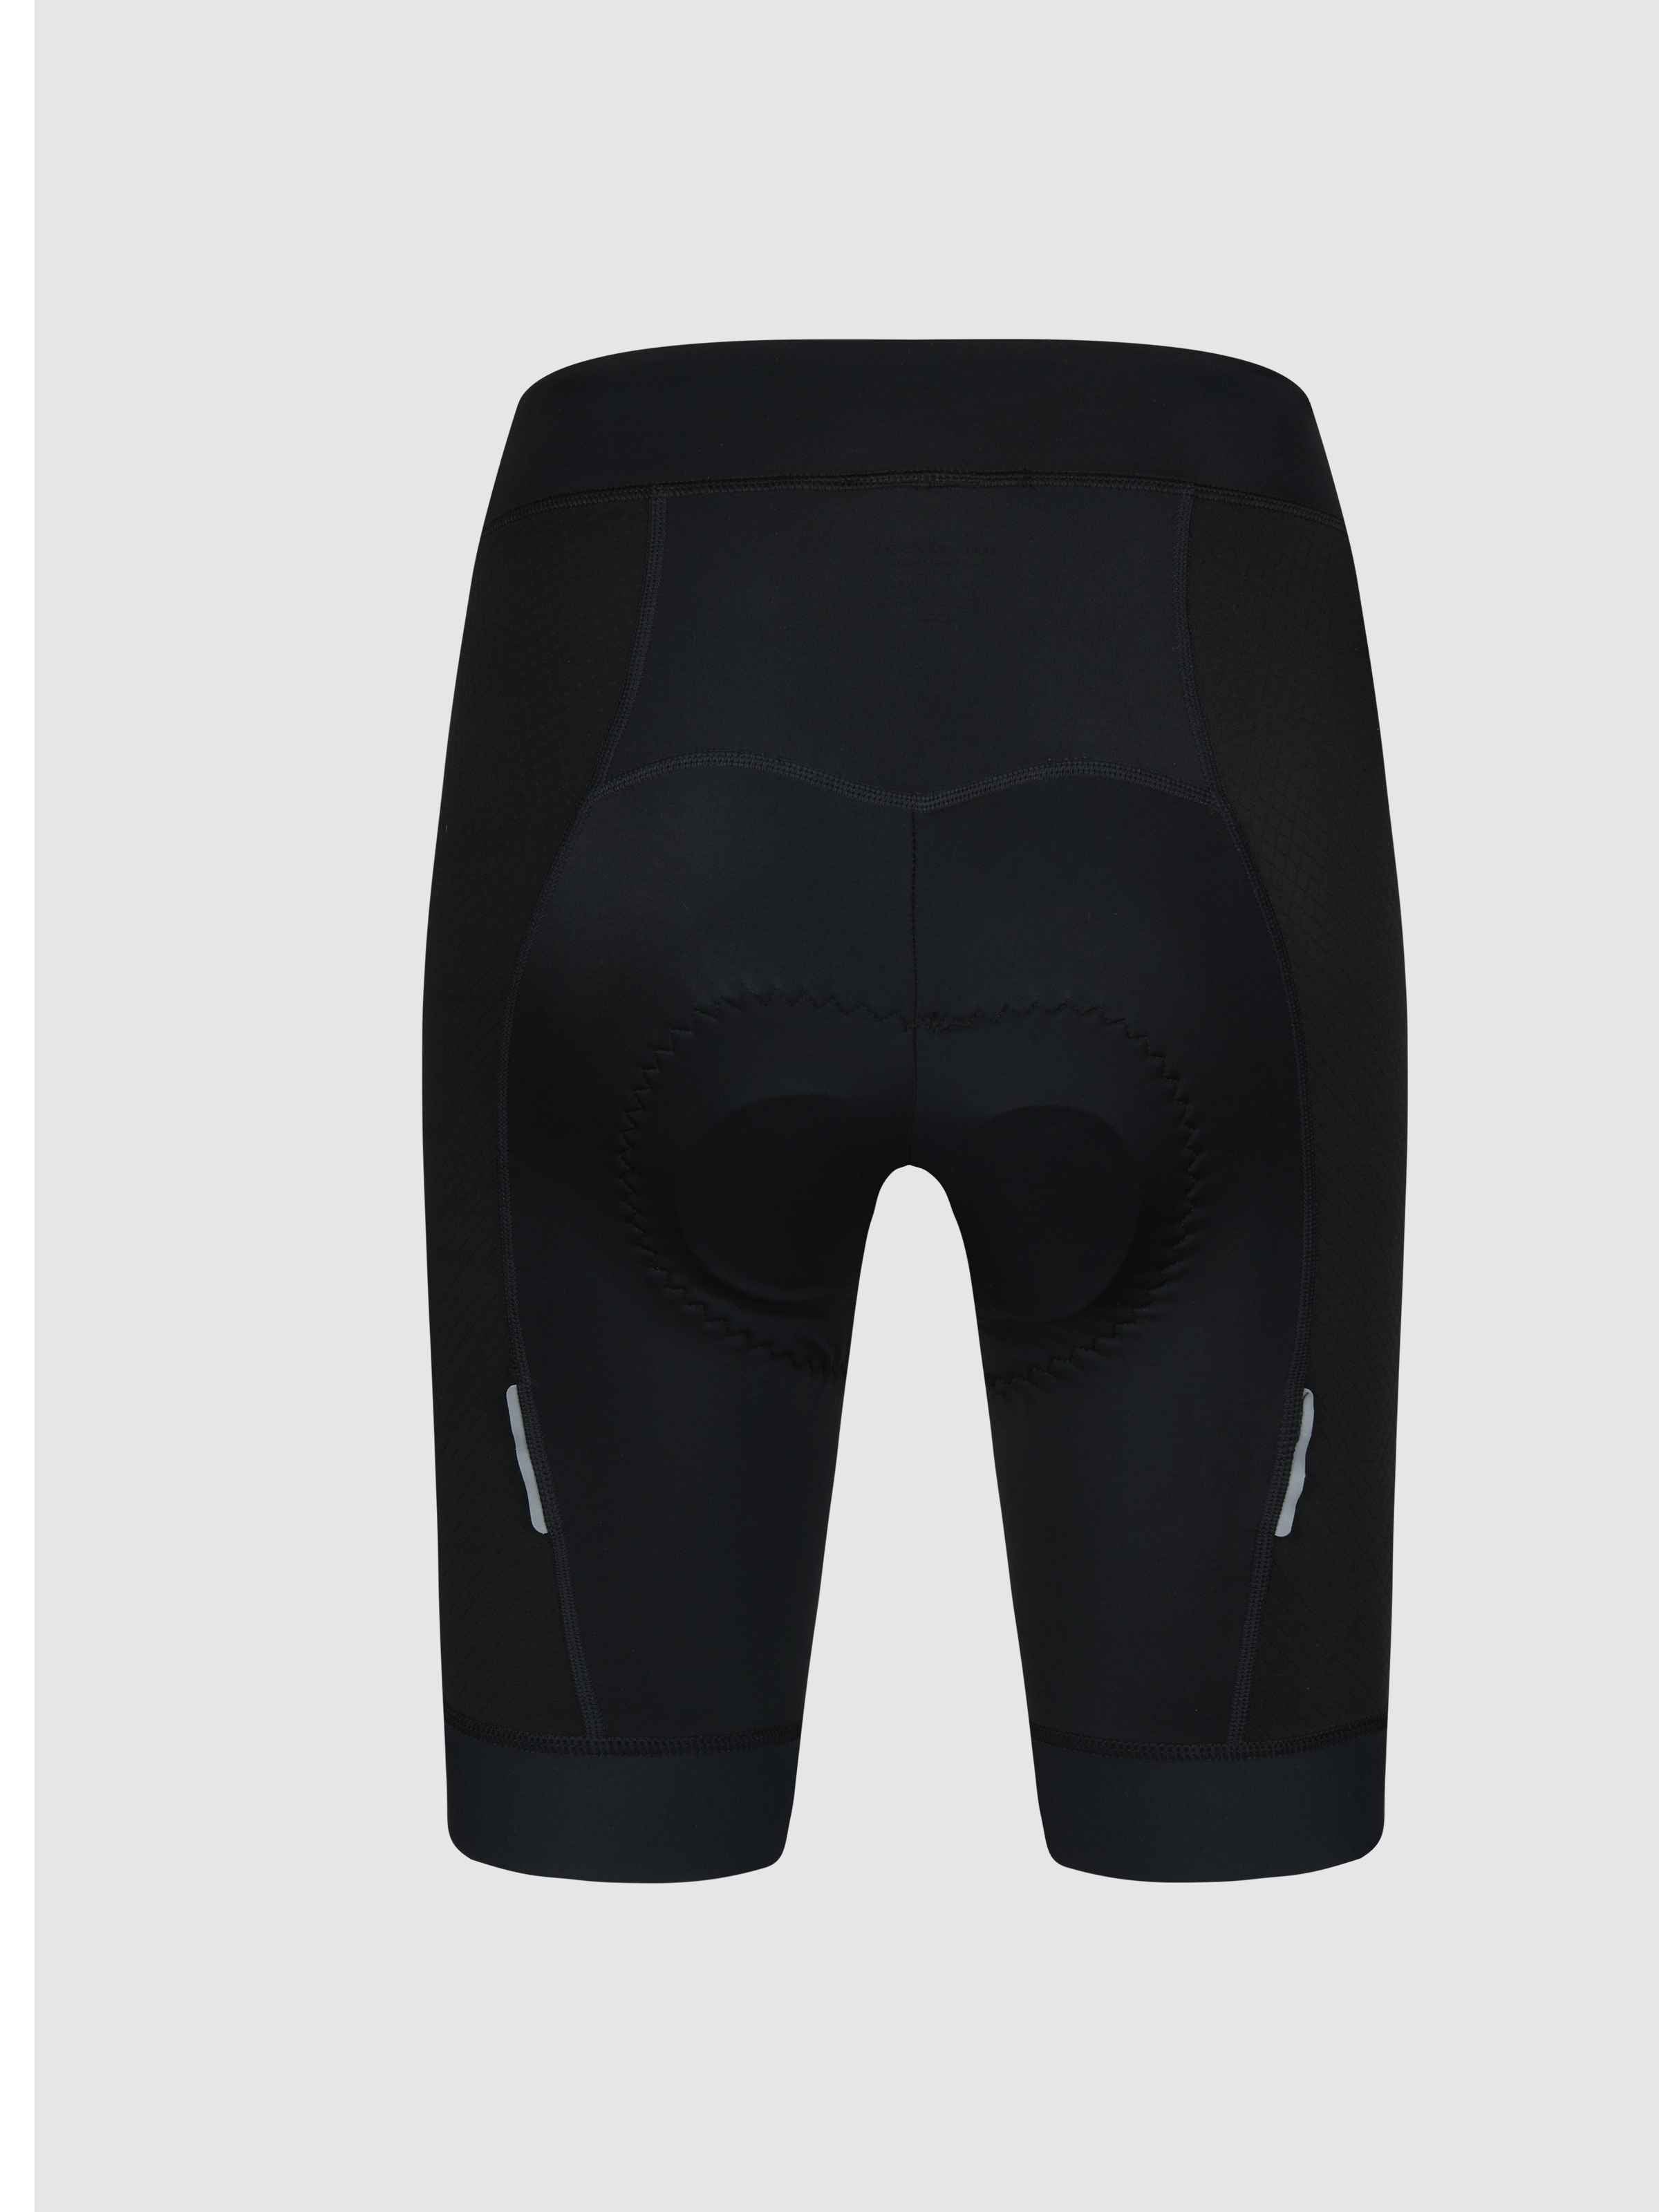 bike shorts